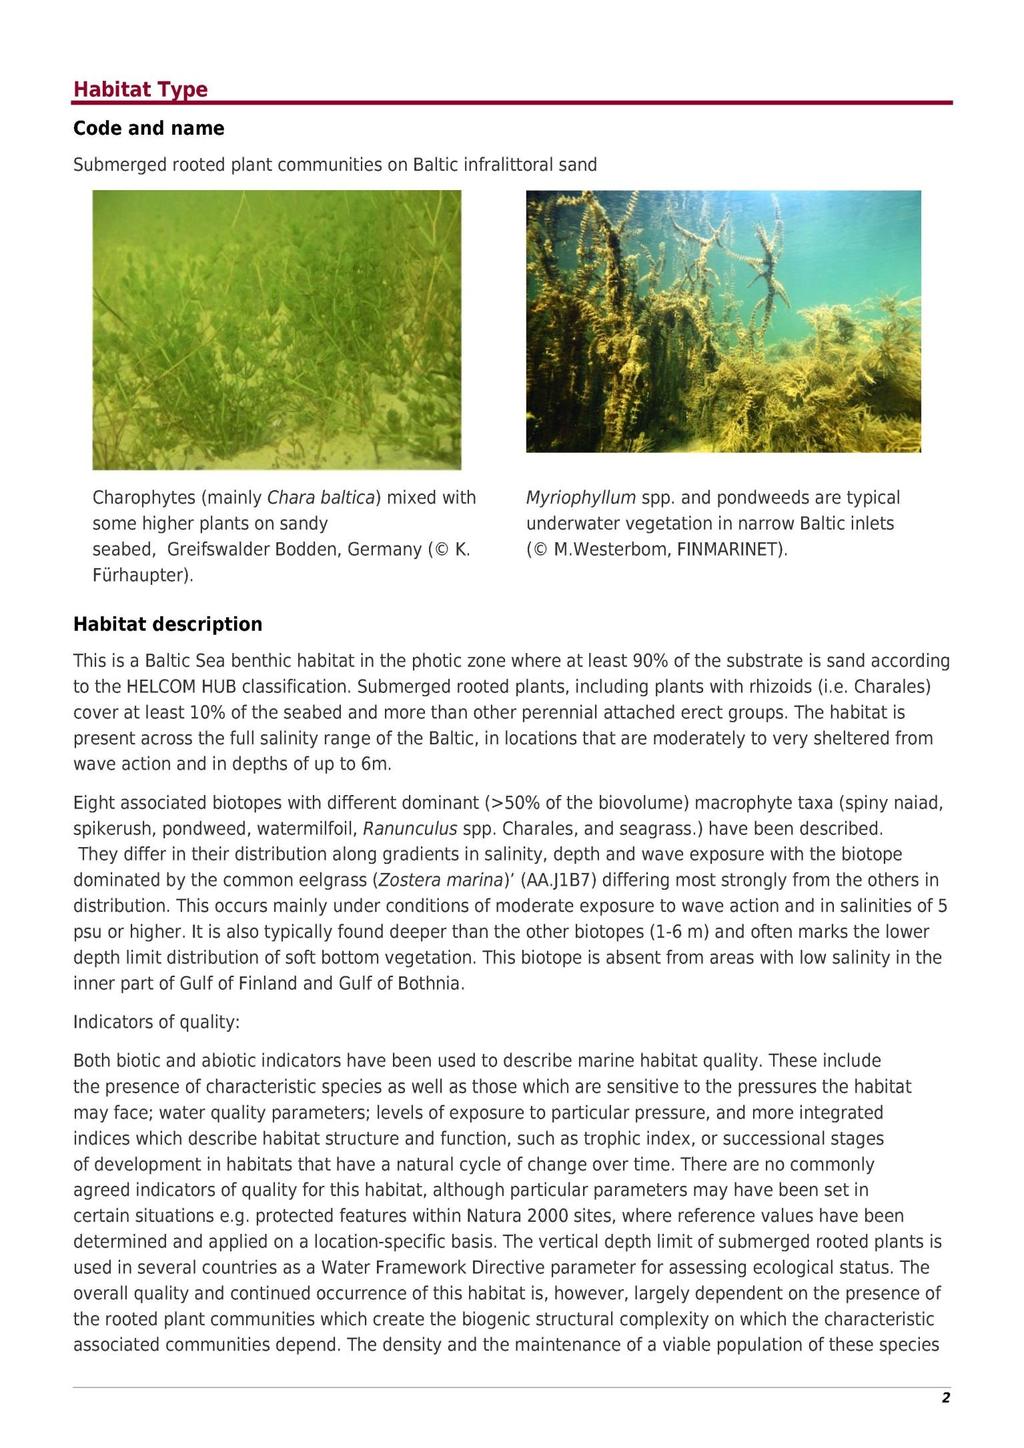 Fact sheets on marine habitats and